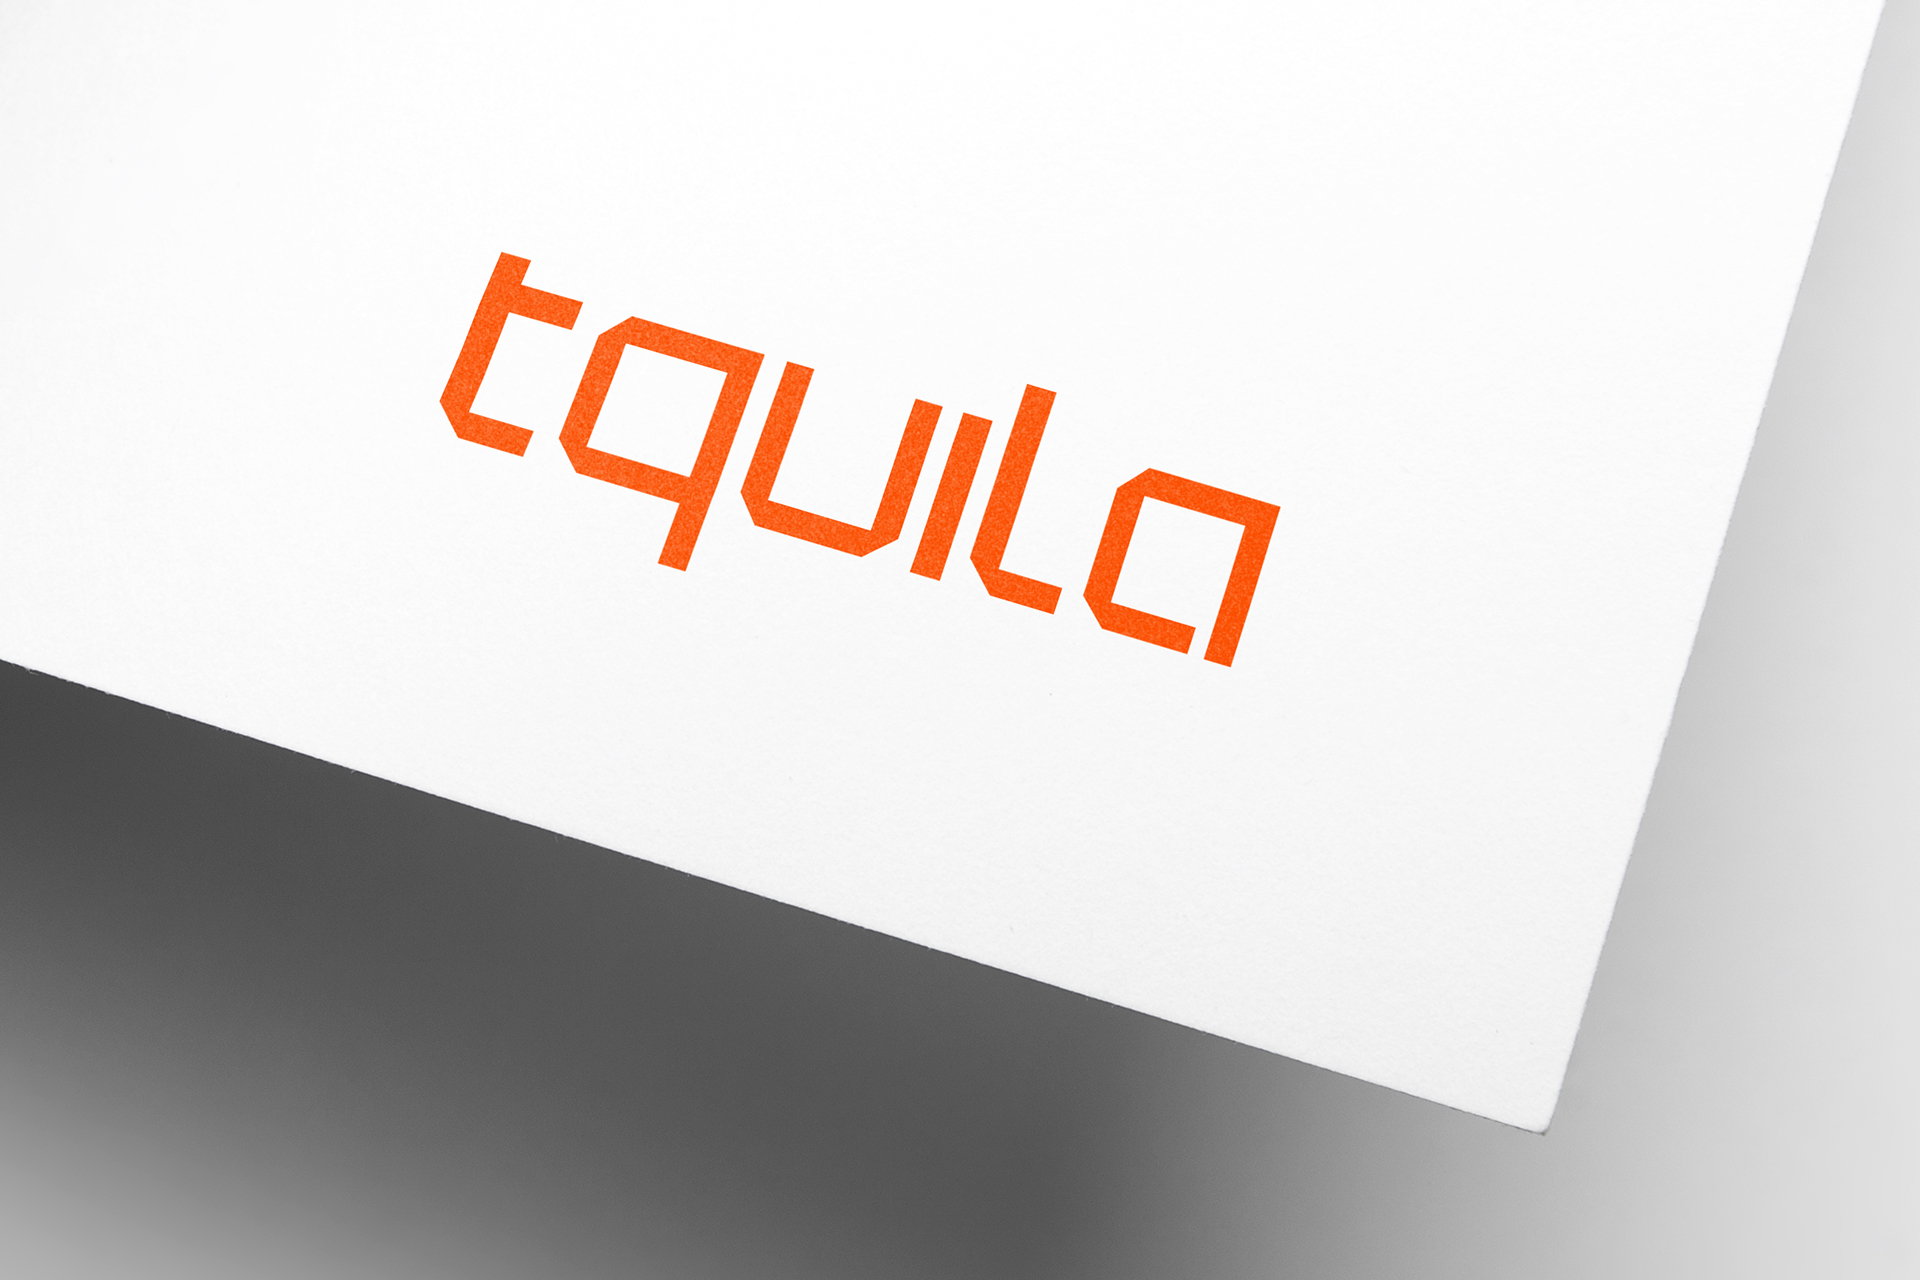 1-Tquila-automation-world-brand-design.jpg